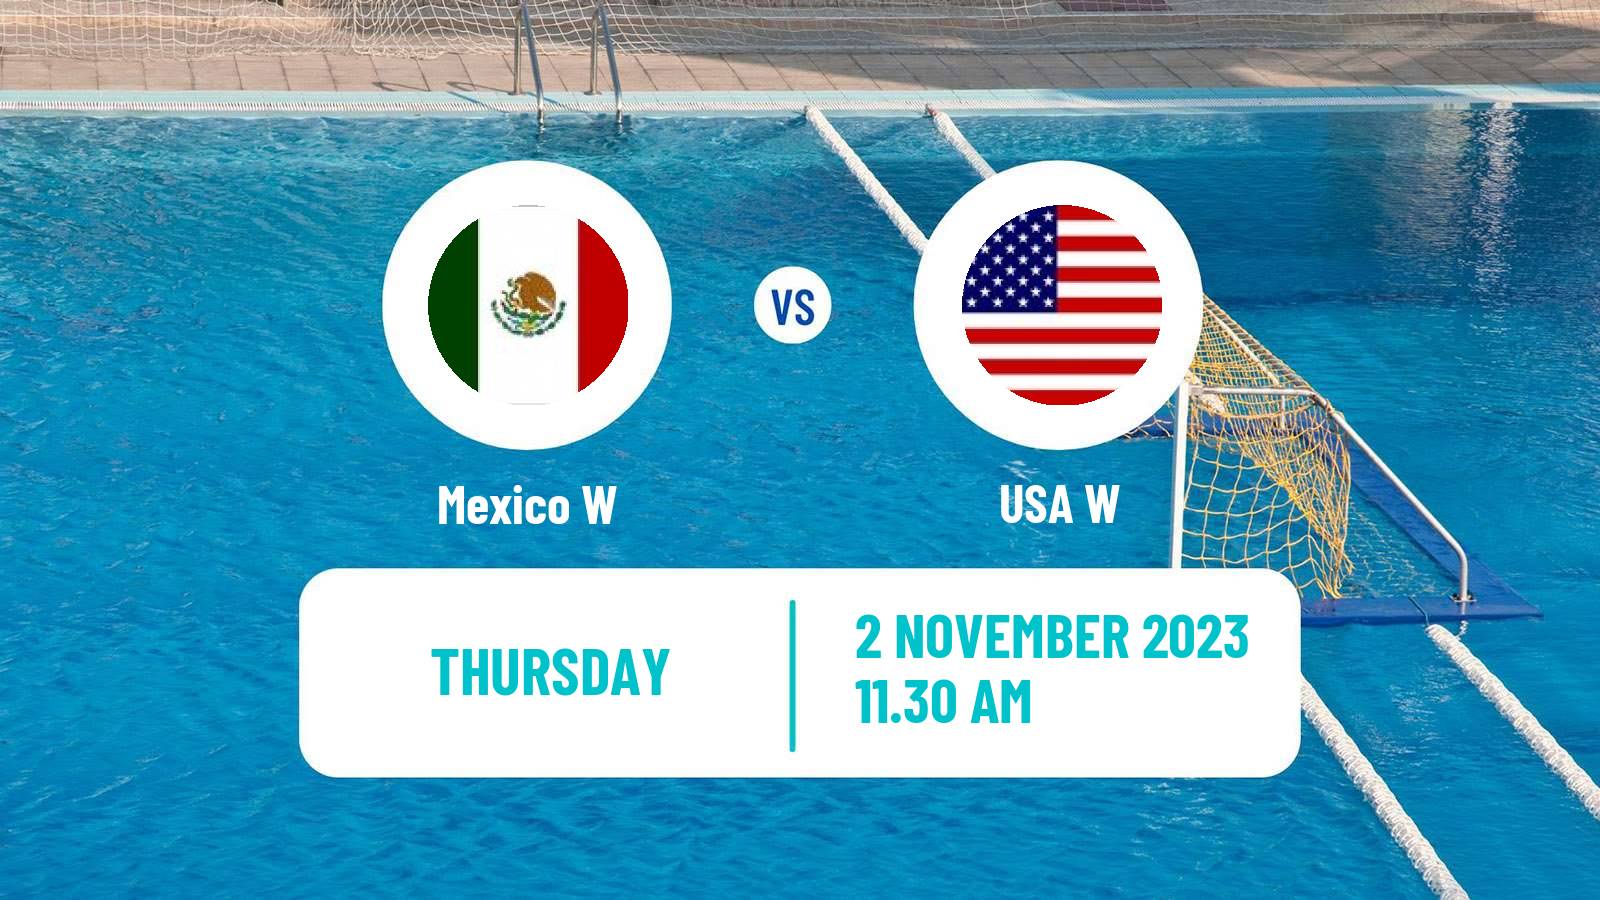 Water polo Pan American Games Water Polo Women Mexico W - USA W